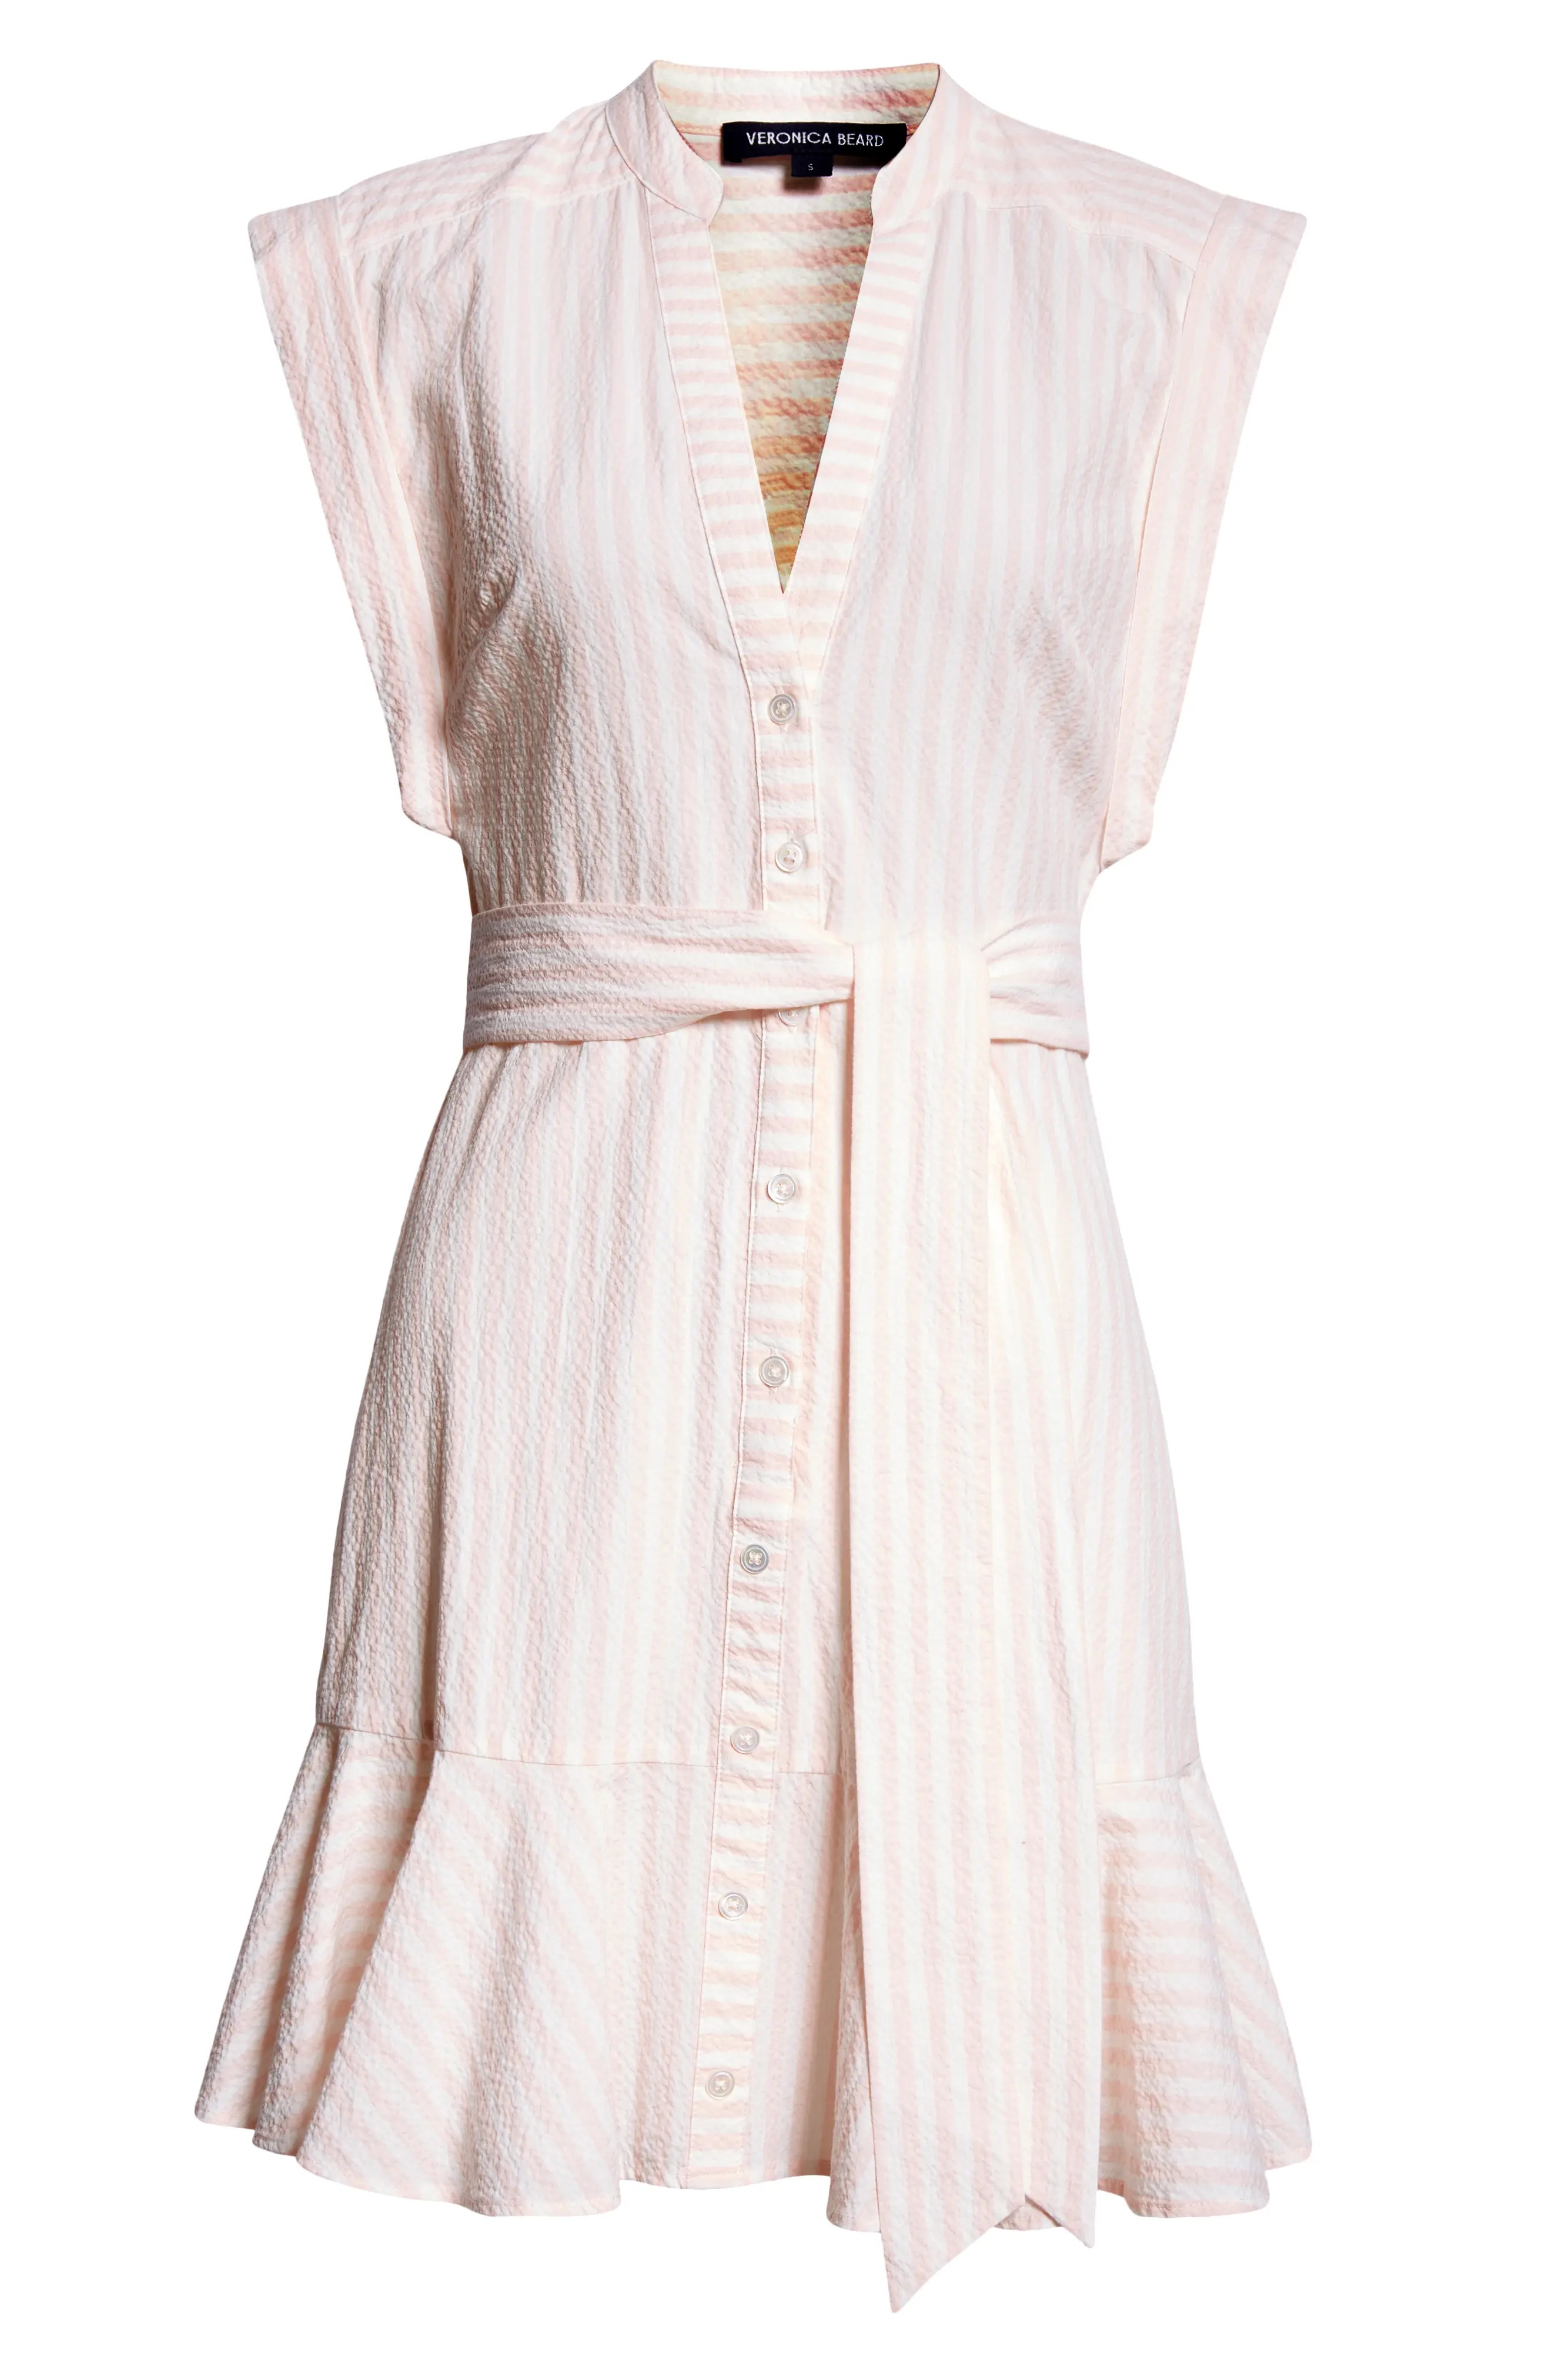 Avella Stripe Stretch Cotton Minidress in Pink/White - 5